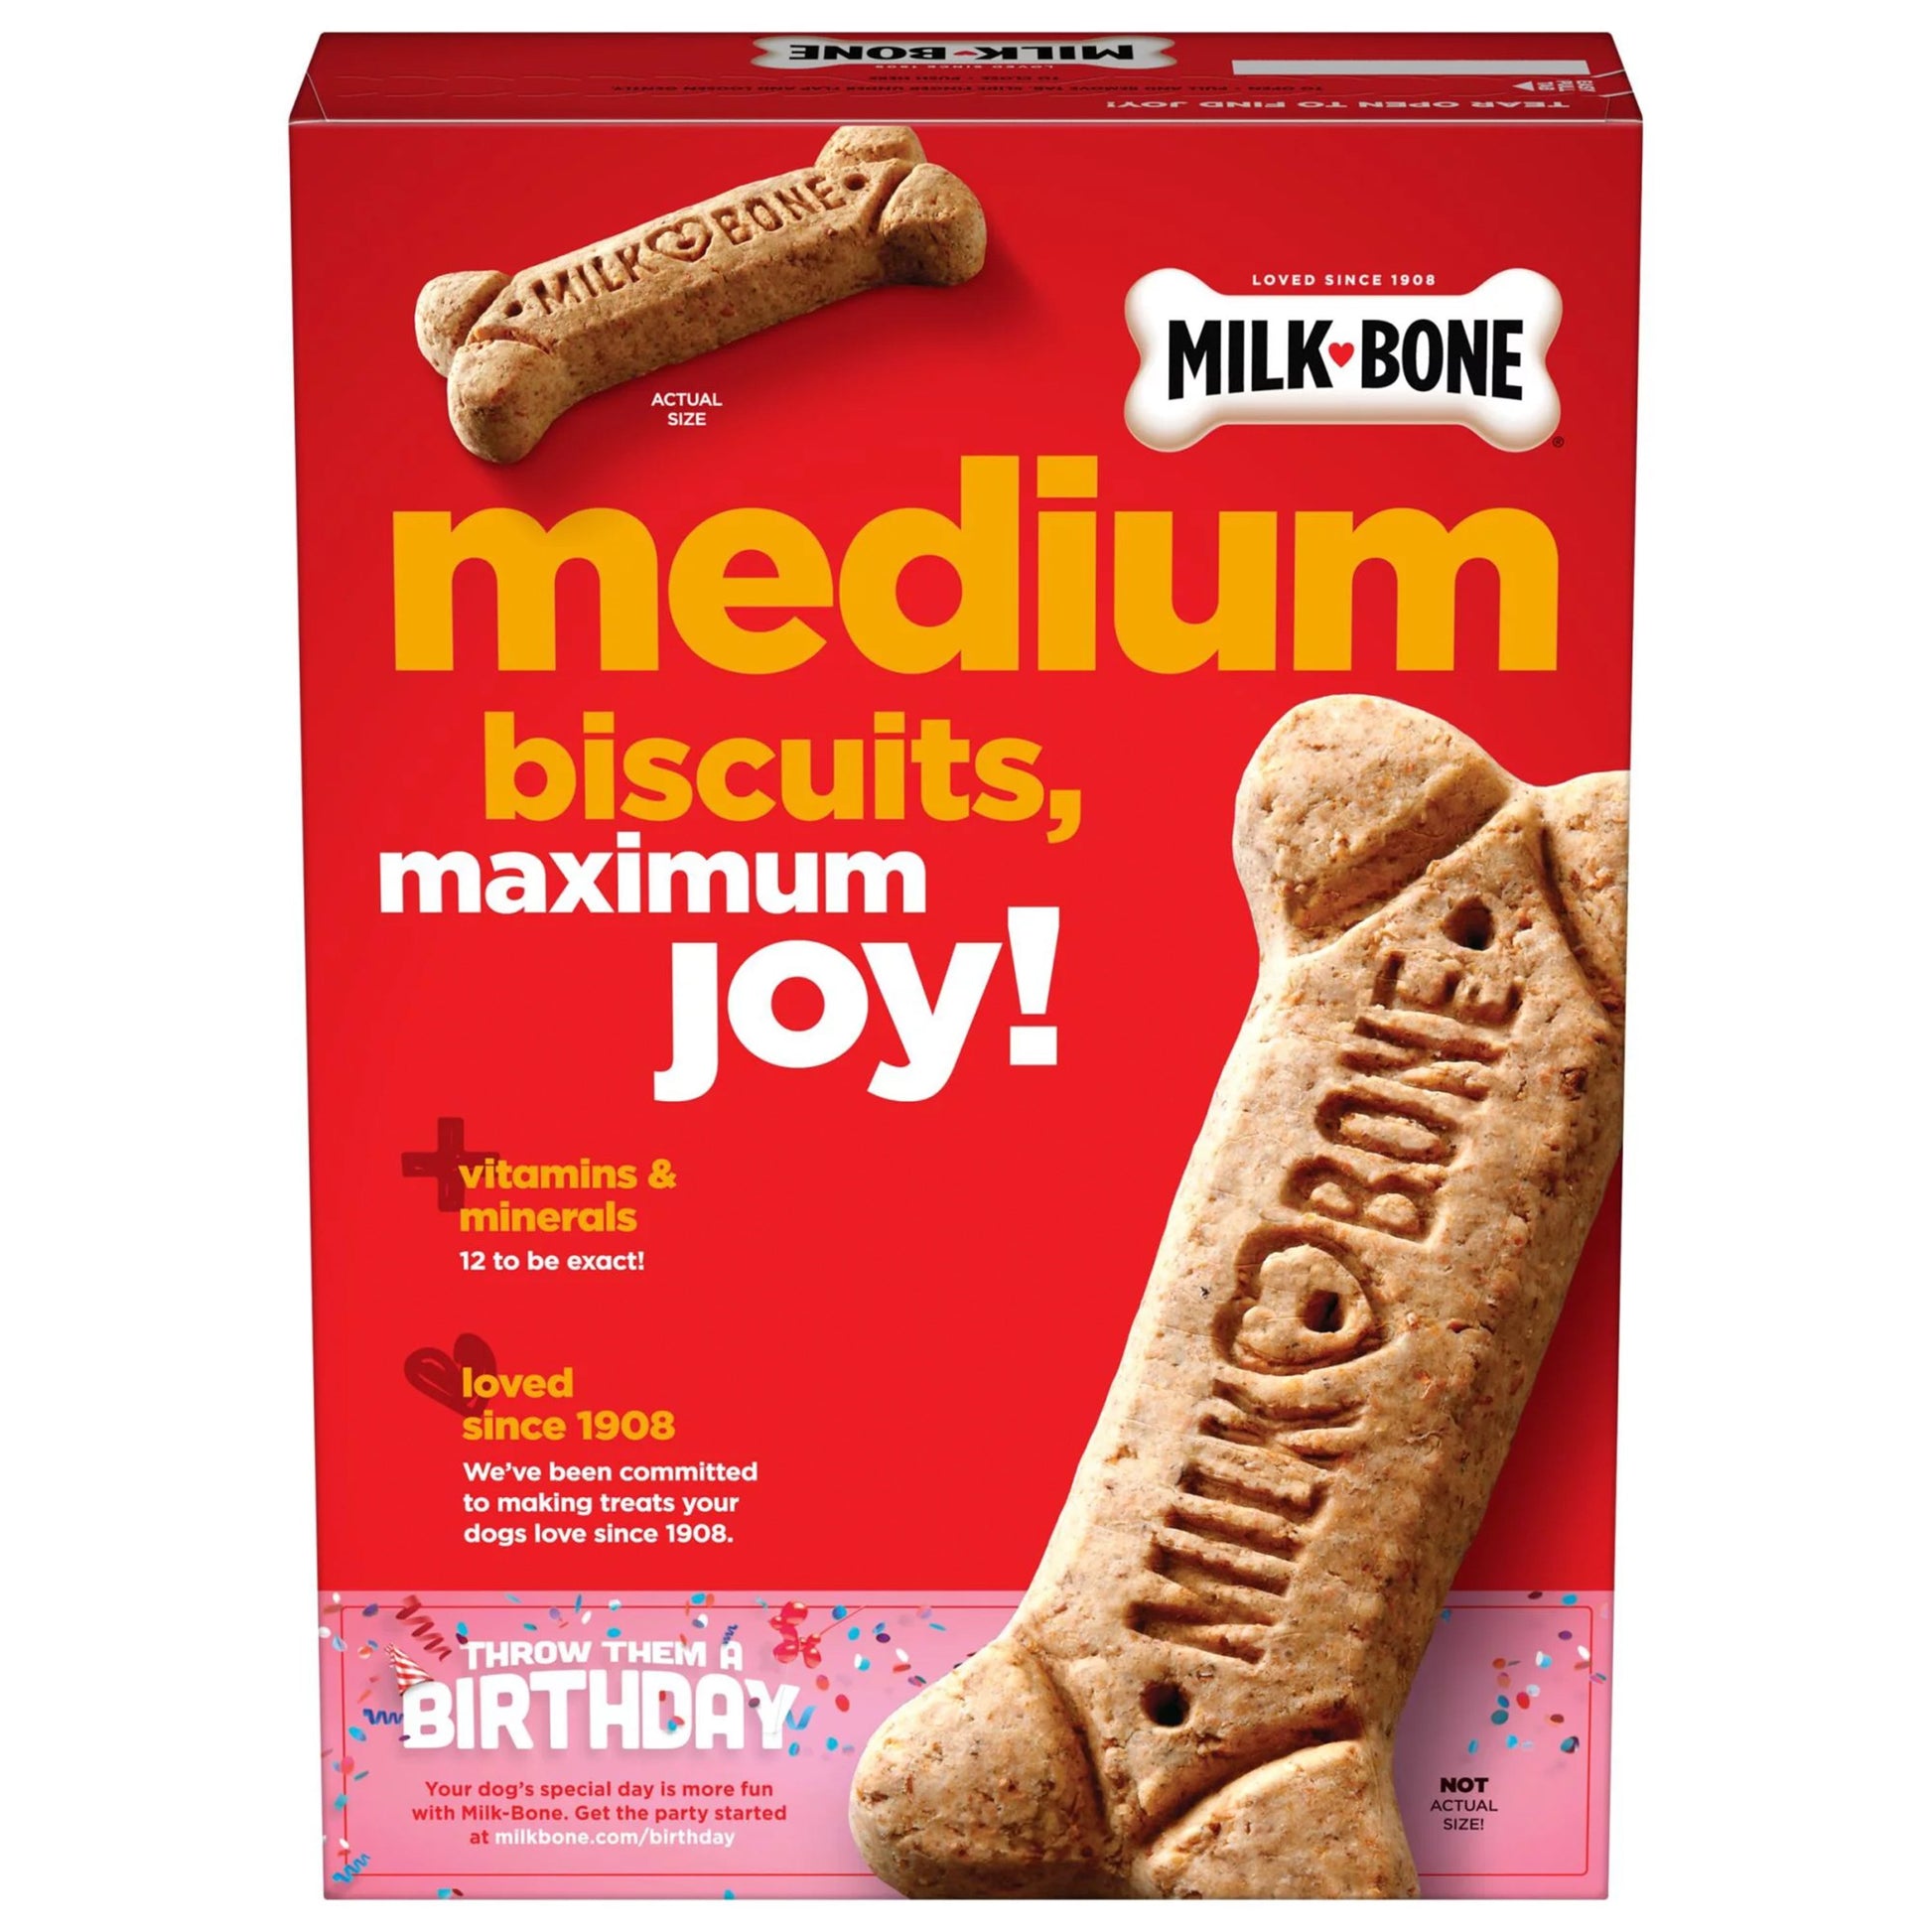 Milk-Bone Original Dog Biscuits Medium, 24 oz, Milk-Bone